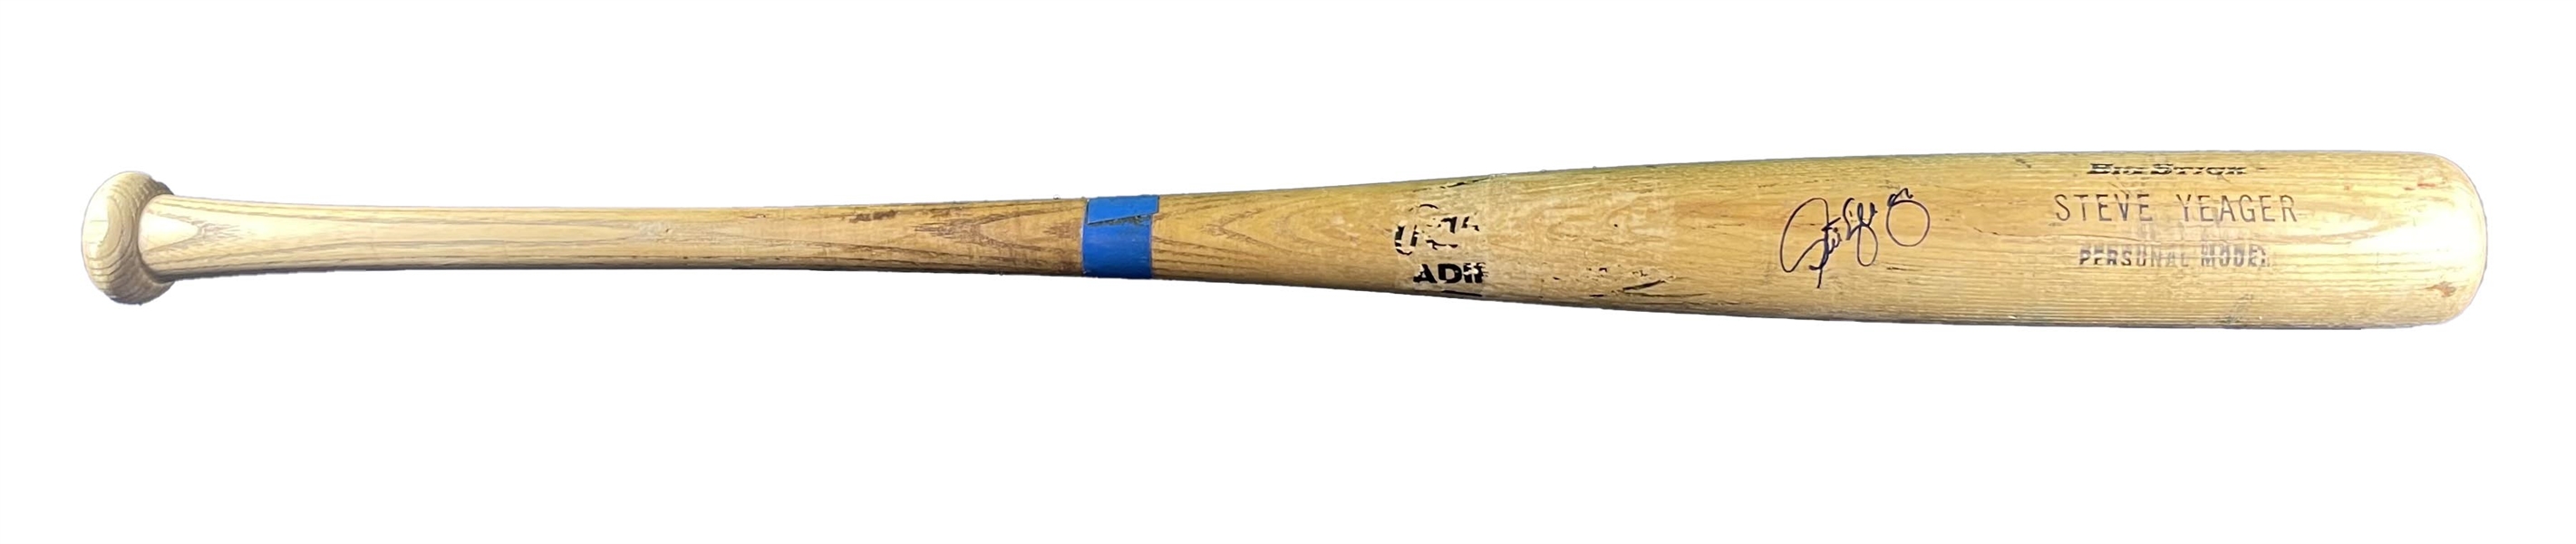 Steve Yeager Signed 1970's Louisville Slugger Game Used Baseball Bat